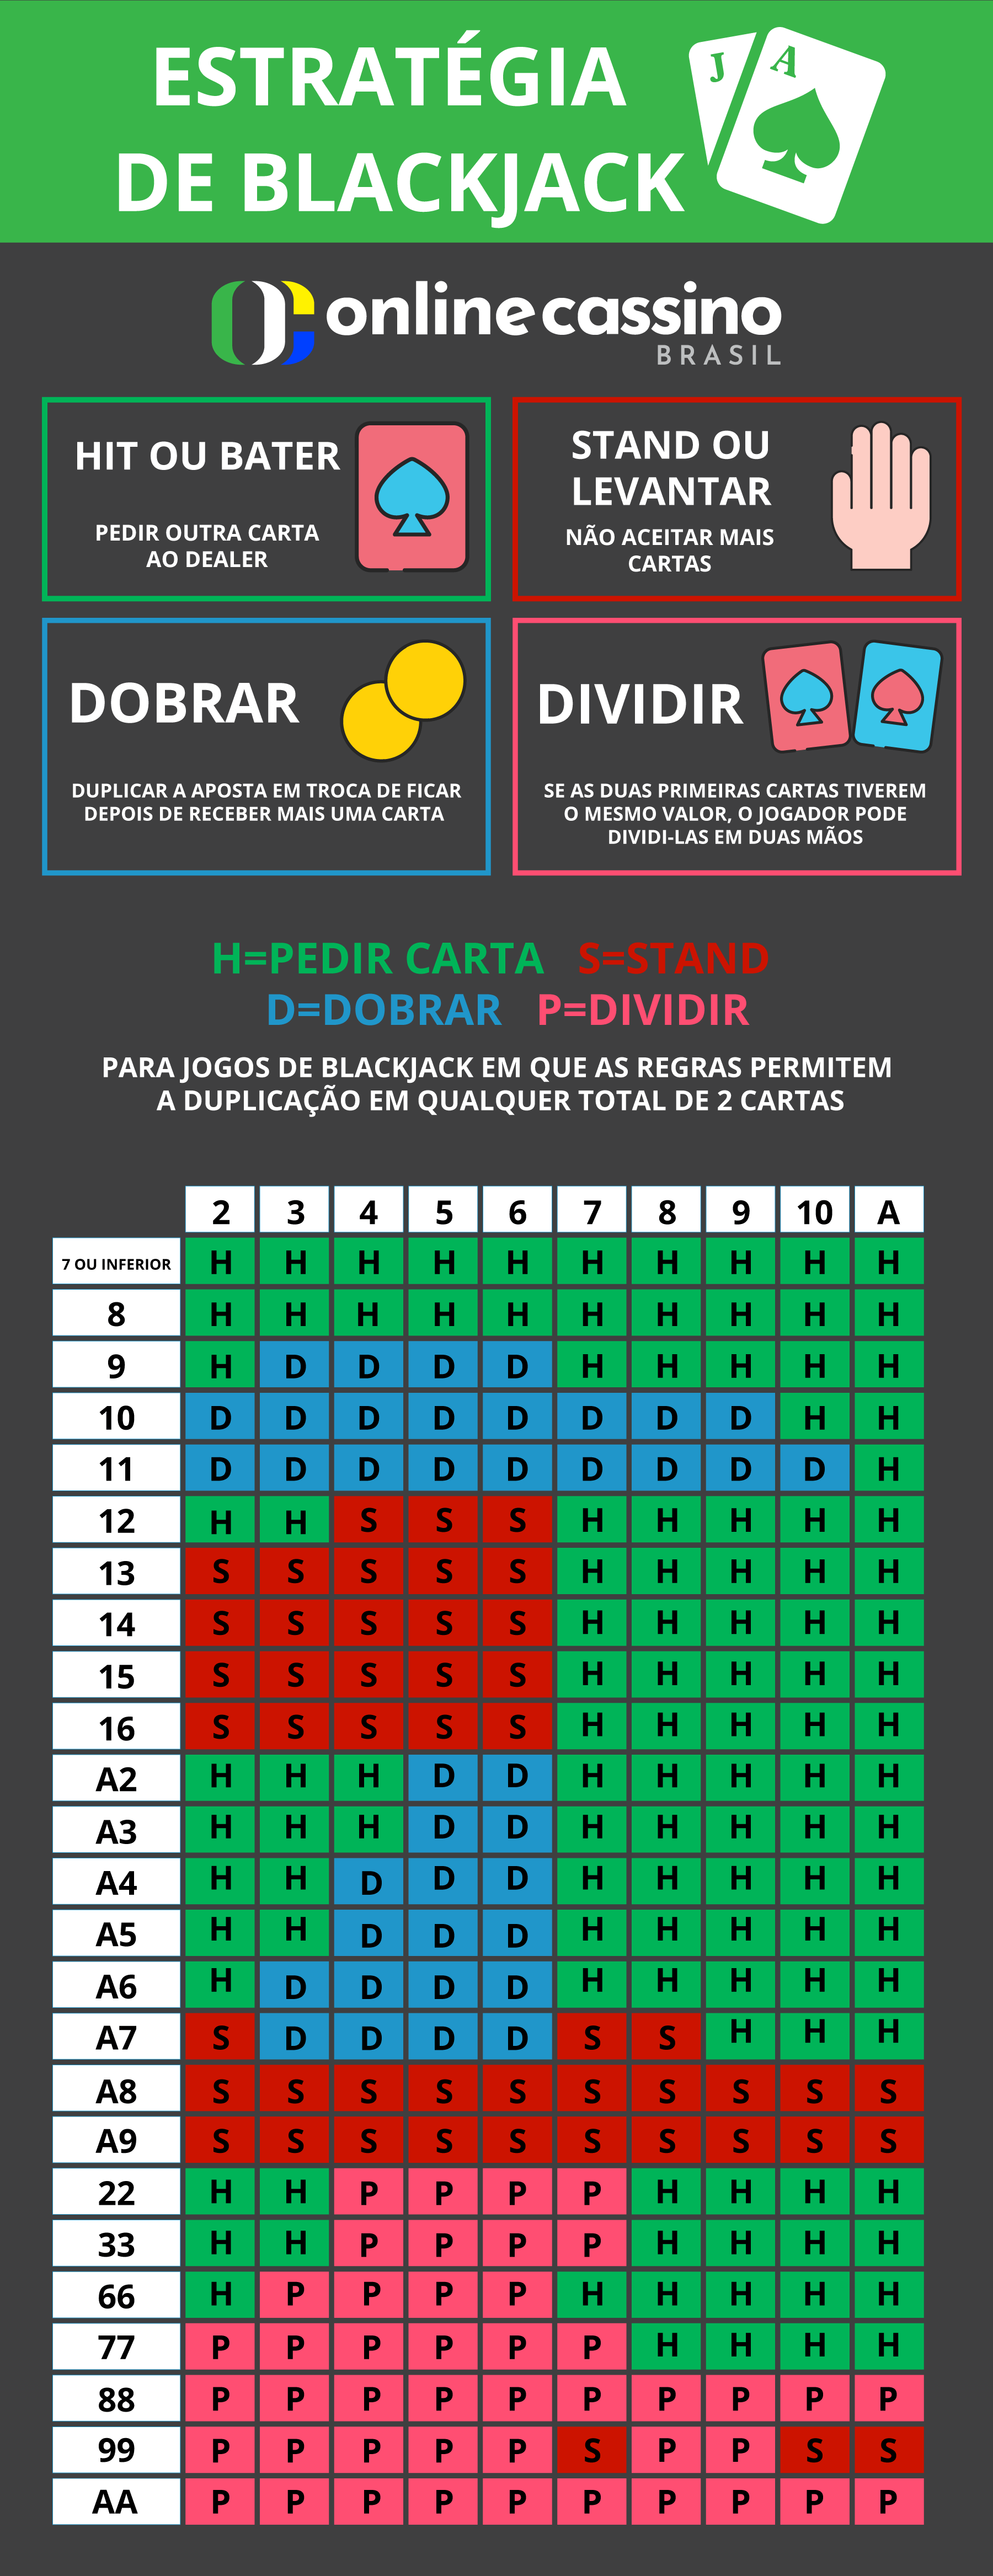 infografia-estrategias-blackjack-portugal